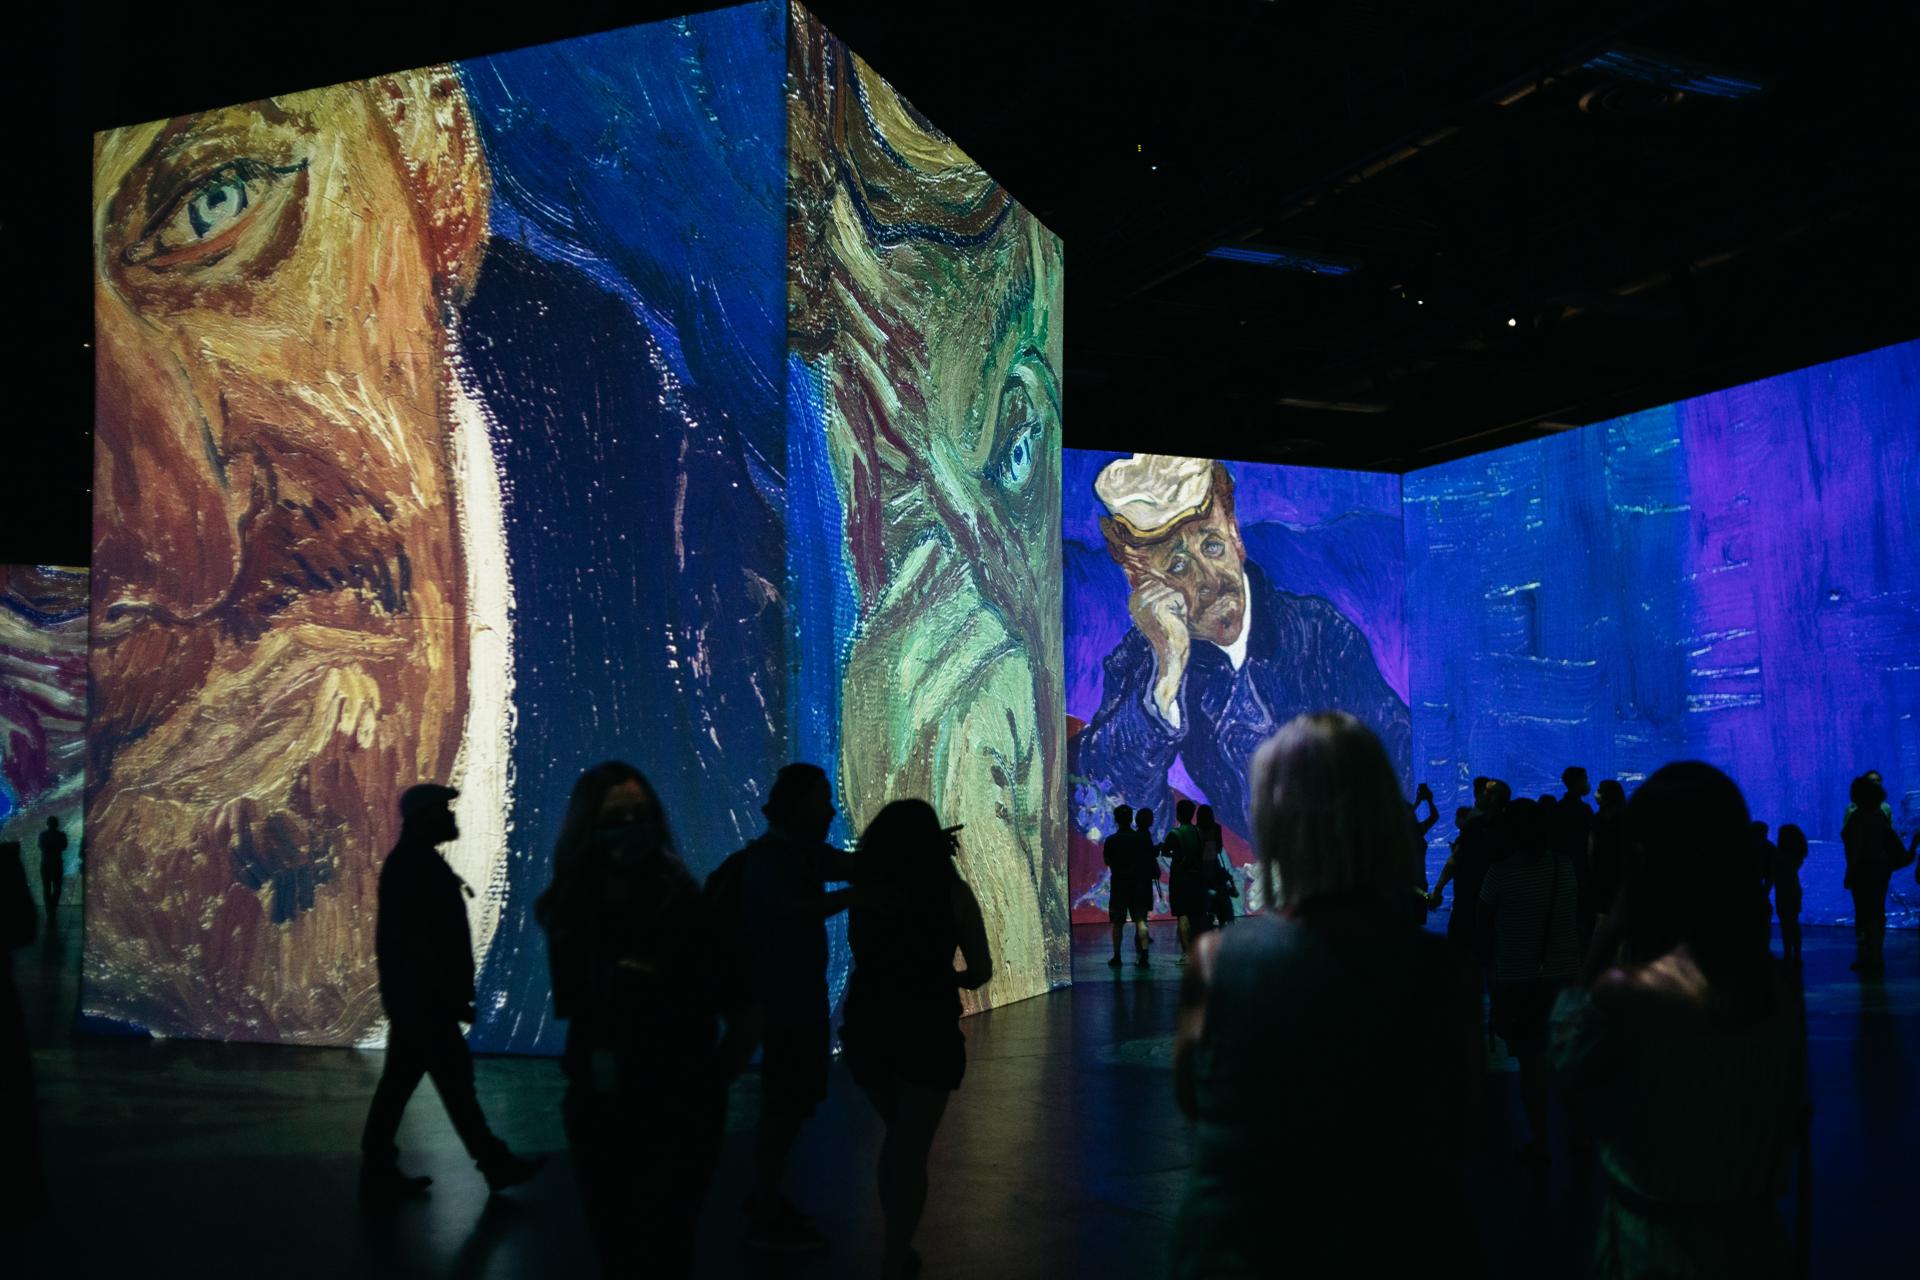 Van Gogh's Starry Night returns to the Atelier des Lumières!